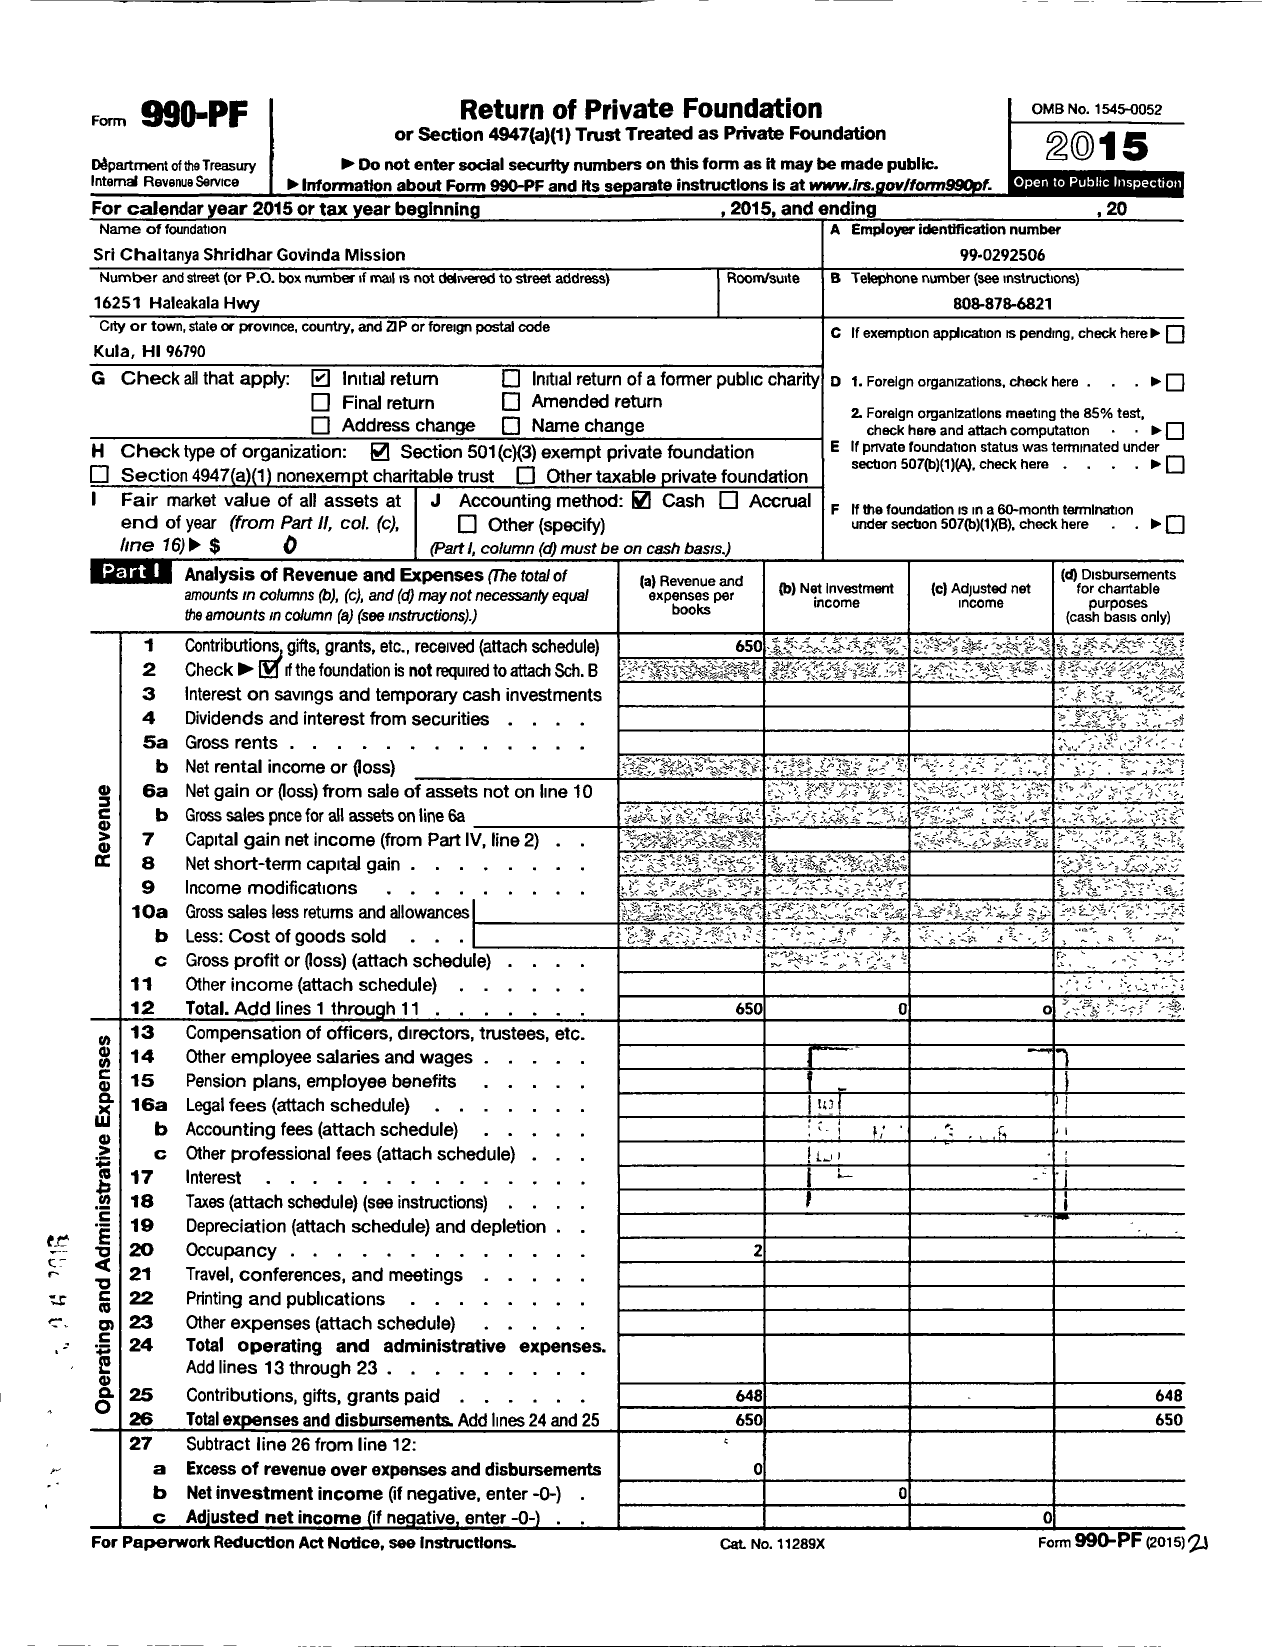 Image of first page of 2015 Form 990PF for Shri Chaitanya Shridhar Govinda Mission